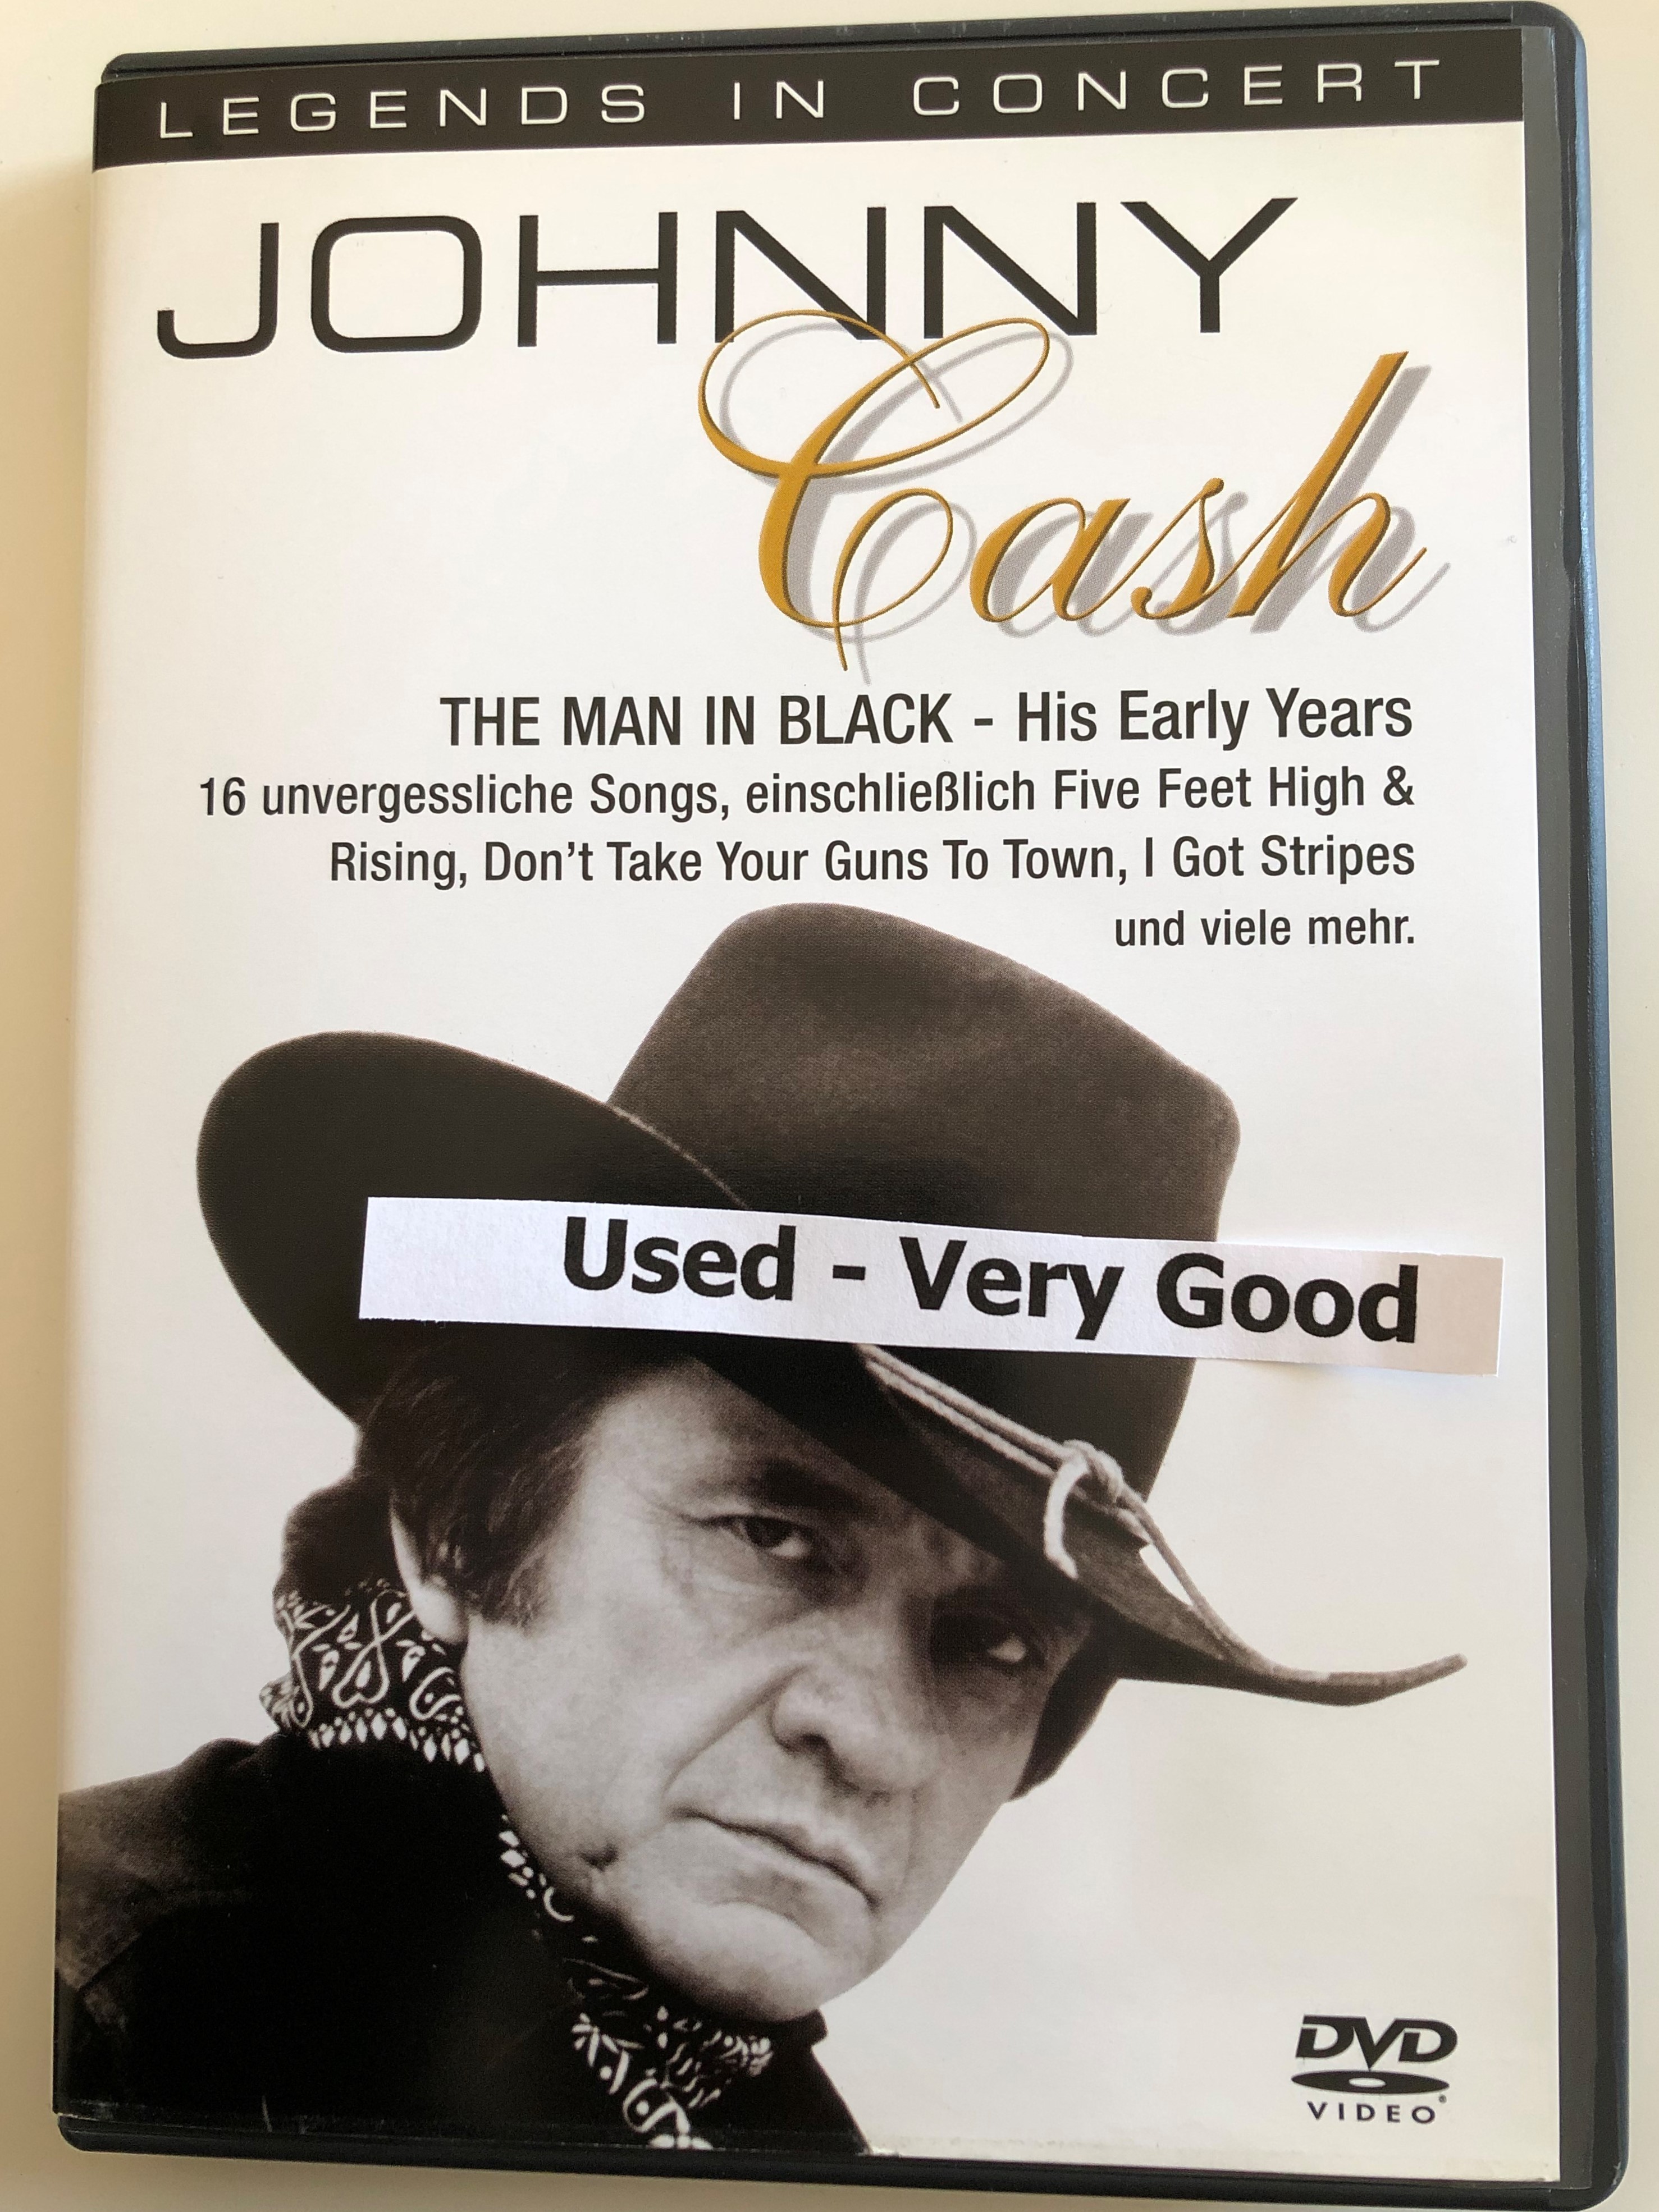 legends-in-concert-johnny-cash-dvd-2004-the-man-in-black-2.jpg